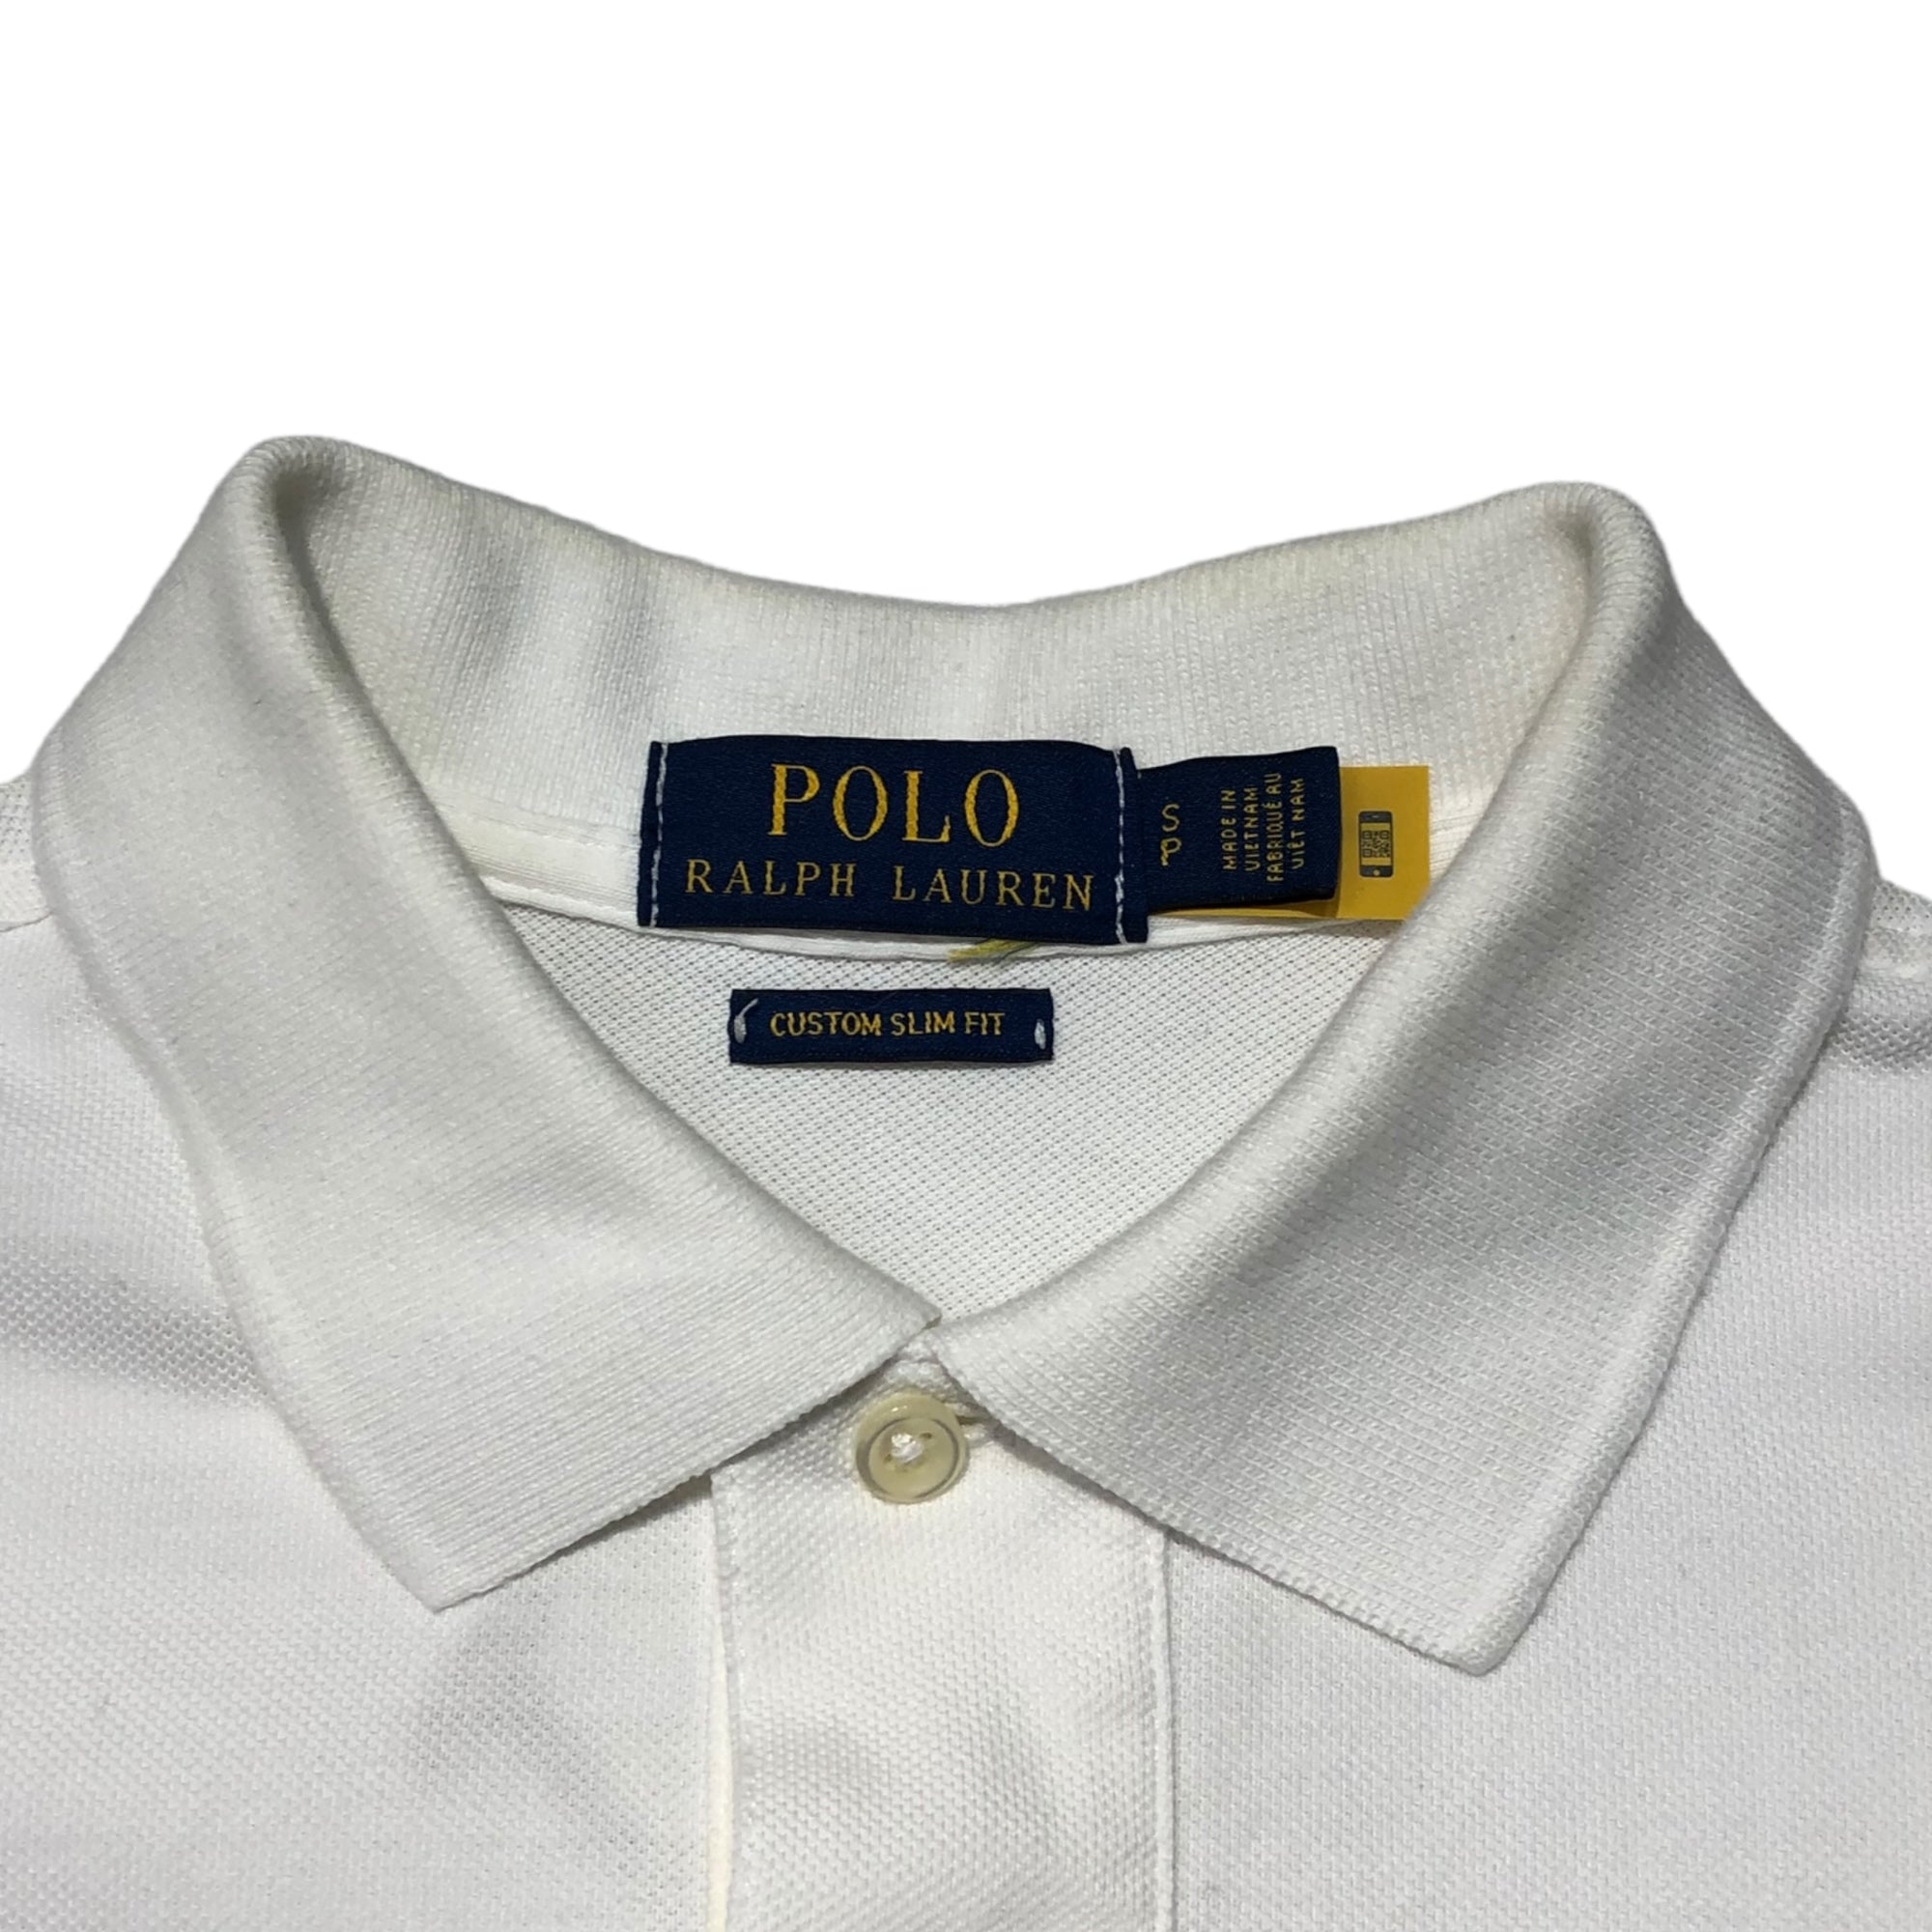 POLO RALPH LAUREN(ポロラルフローレン) polo bear logo embroidery polo shirt ポロ ベア ロゴ 刺繍 半袖 ポロシャツ S ホワイト